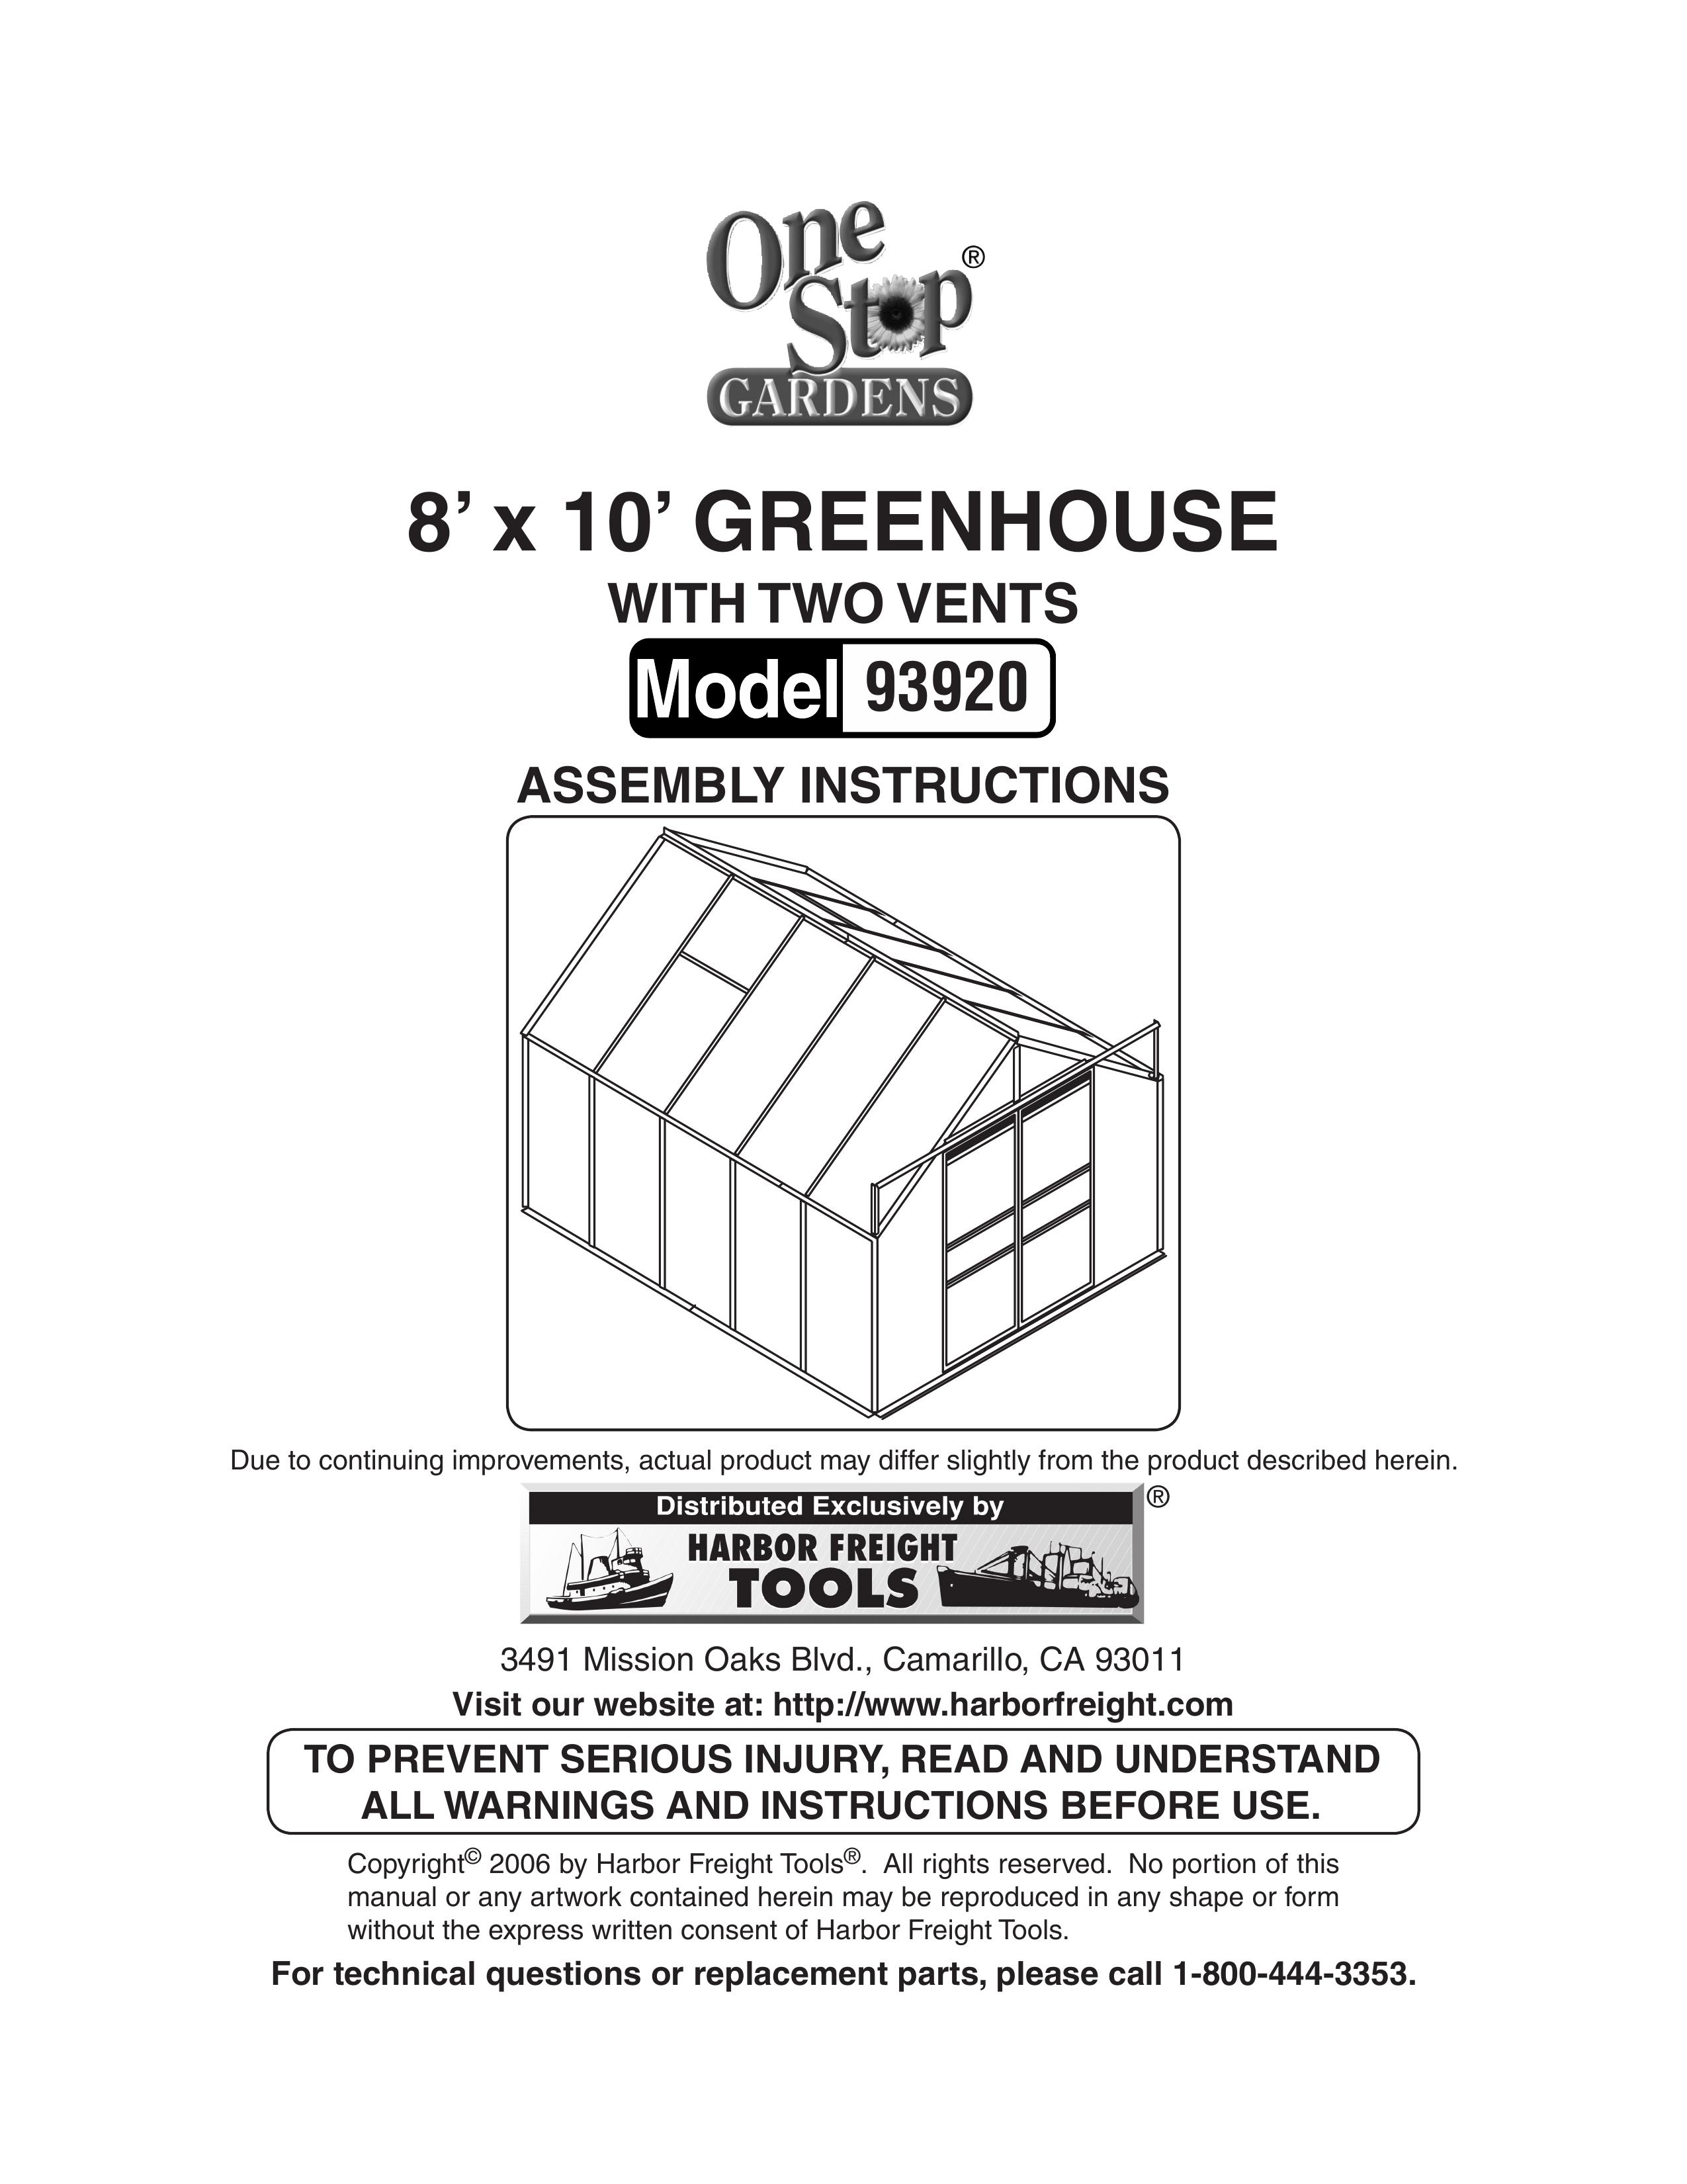 Harbor Freight Tools 93920 Greenhouse Kit User Manual